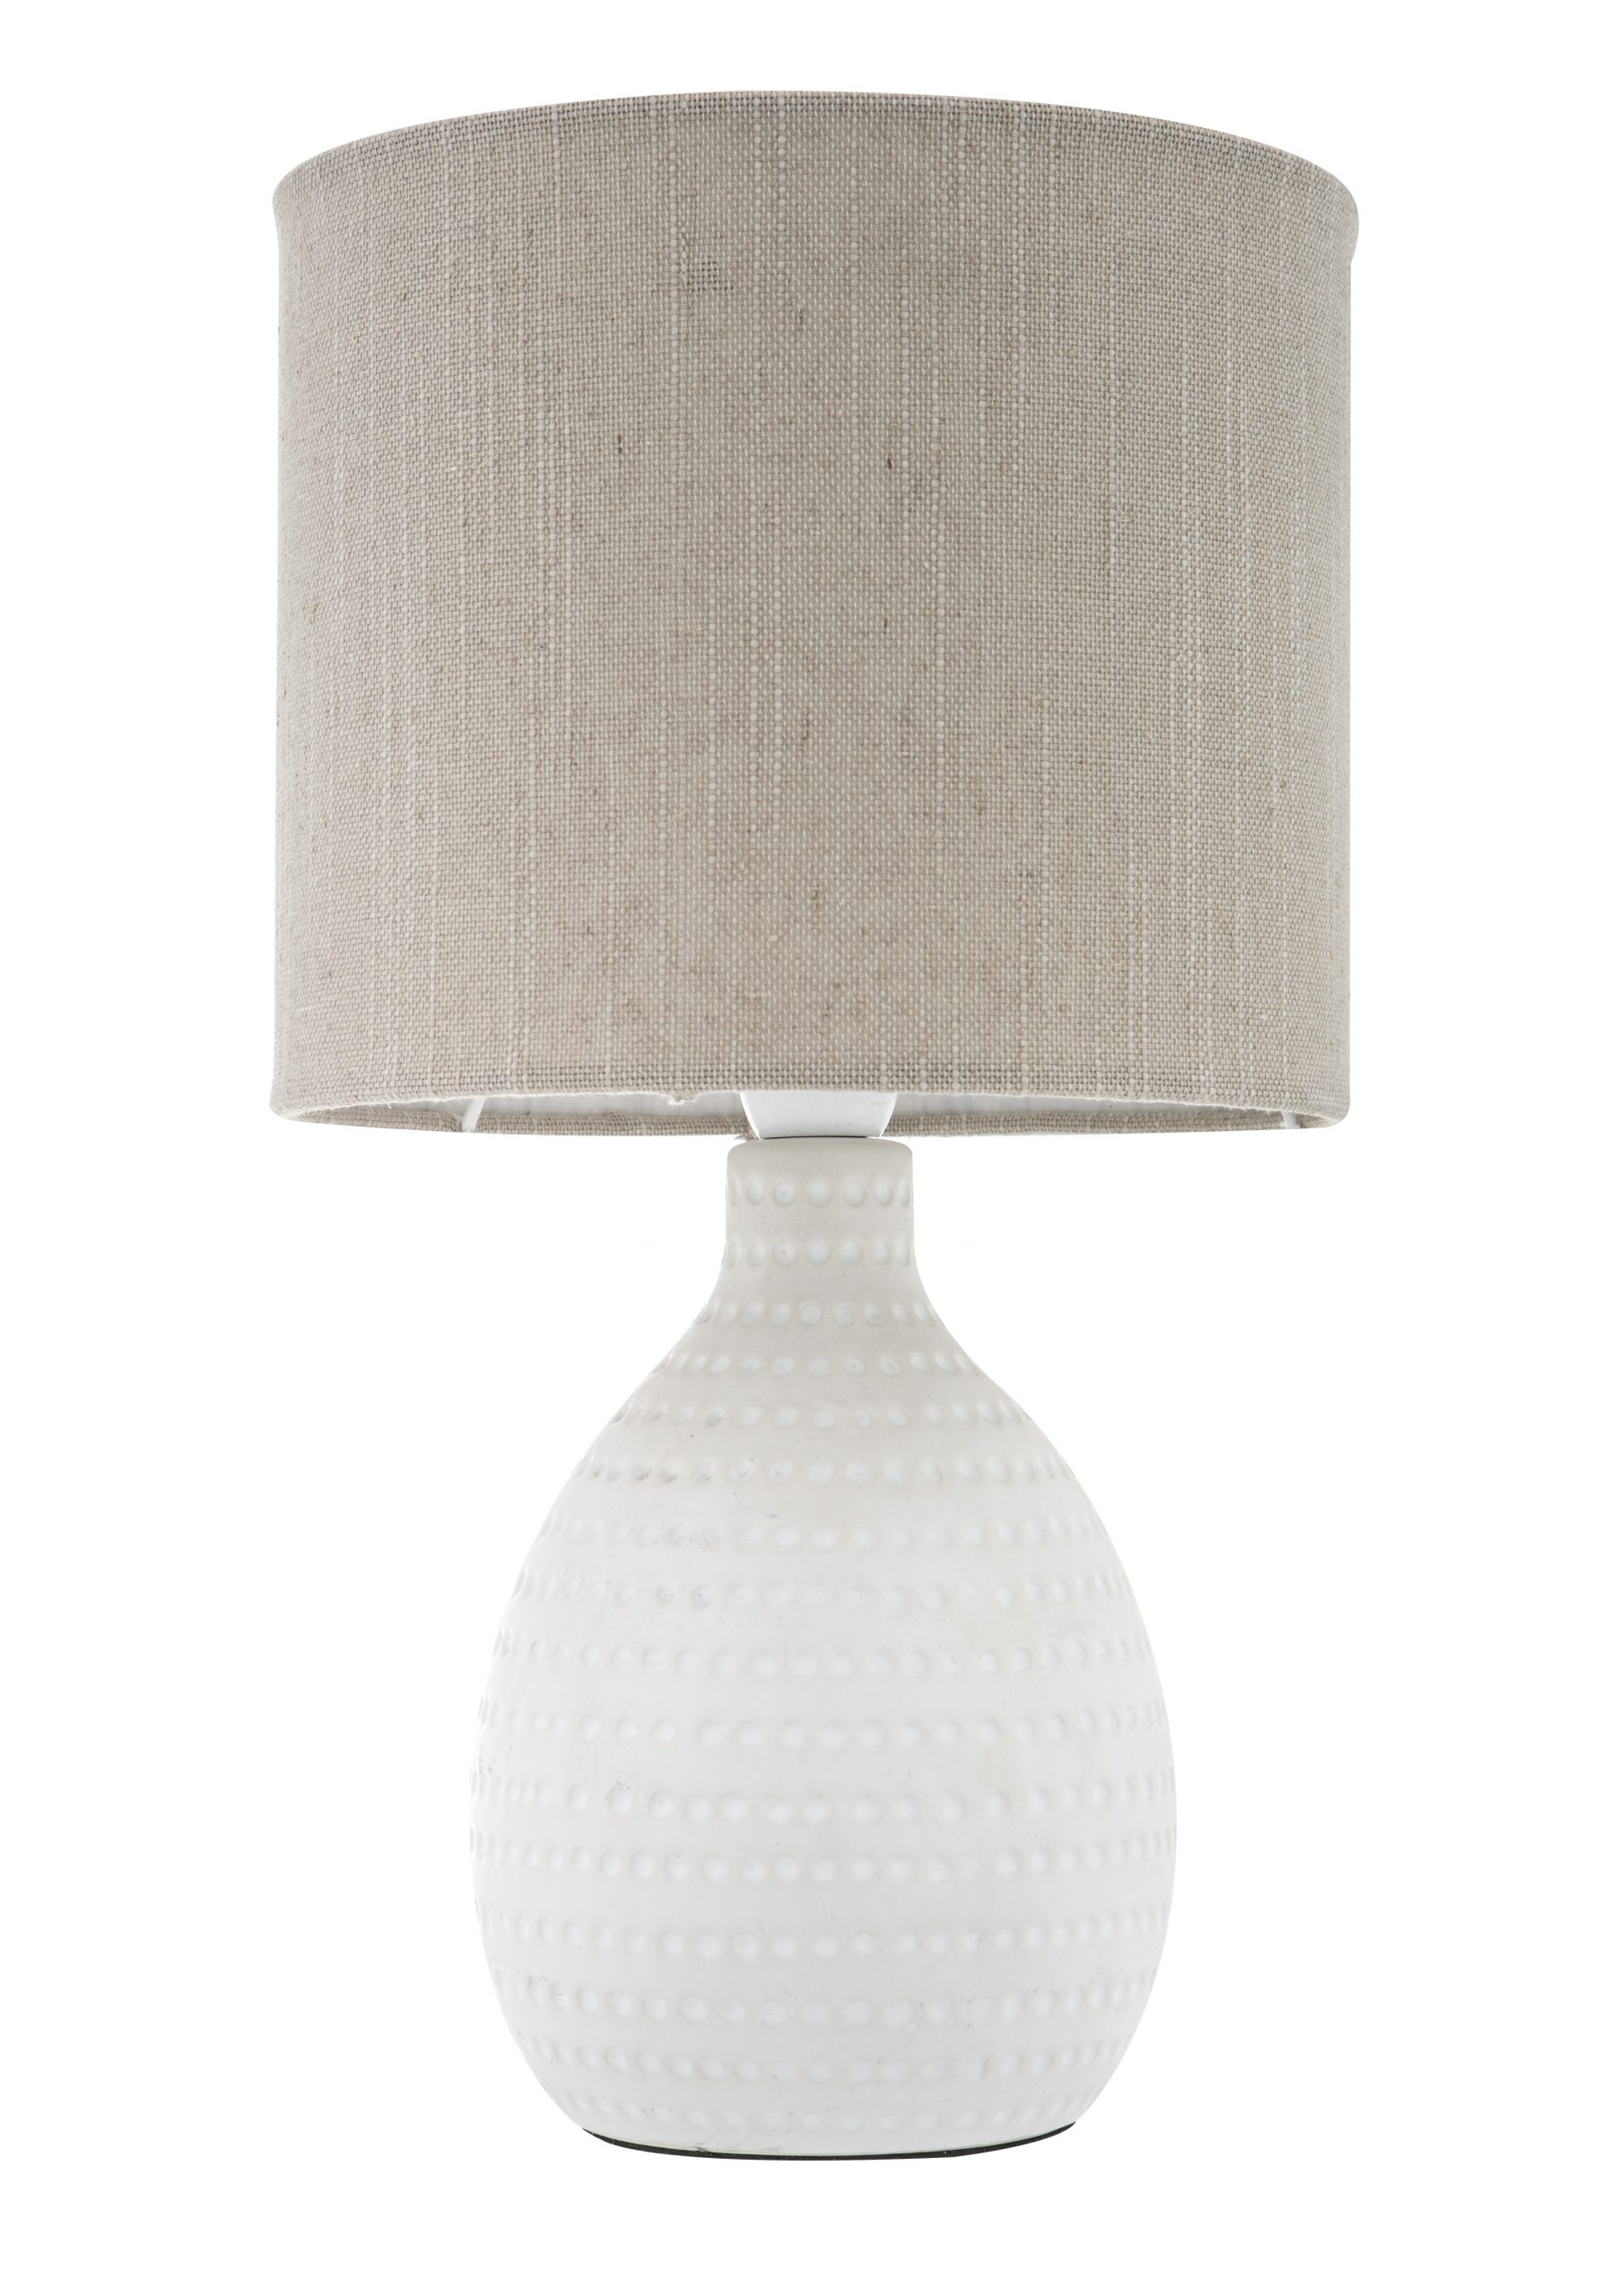 Lamp Asha White H335mm